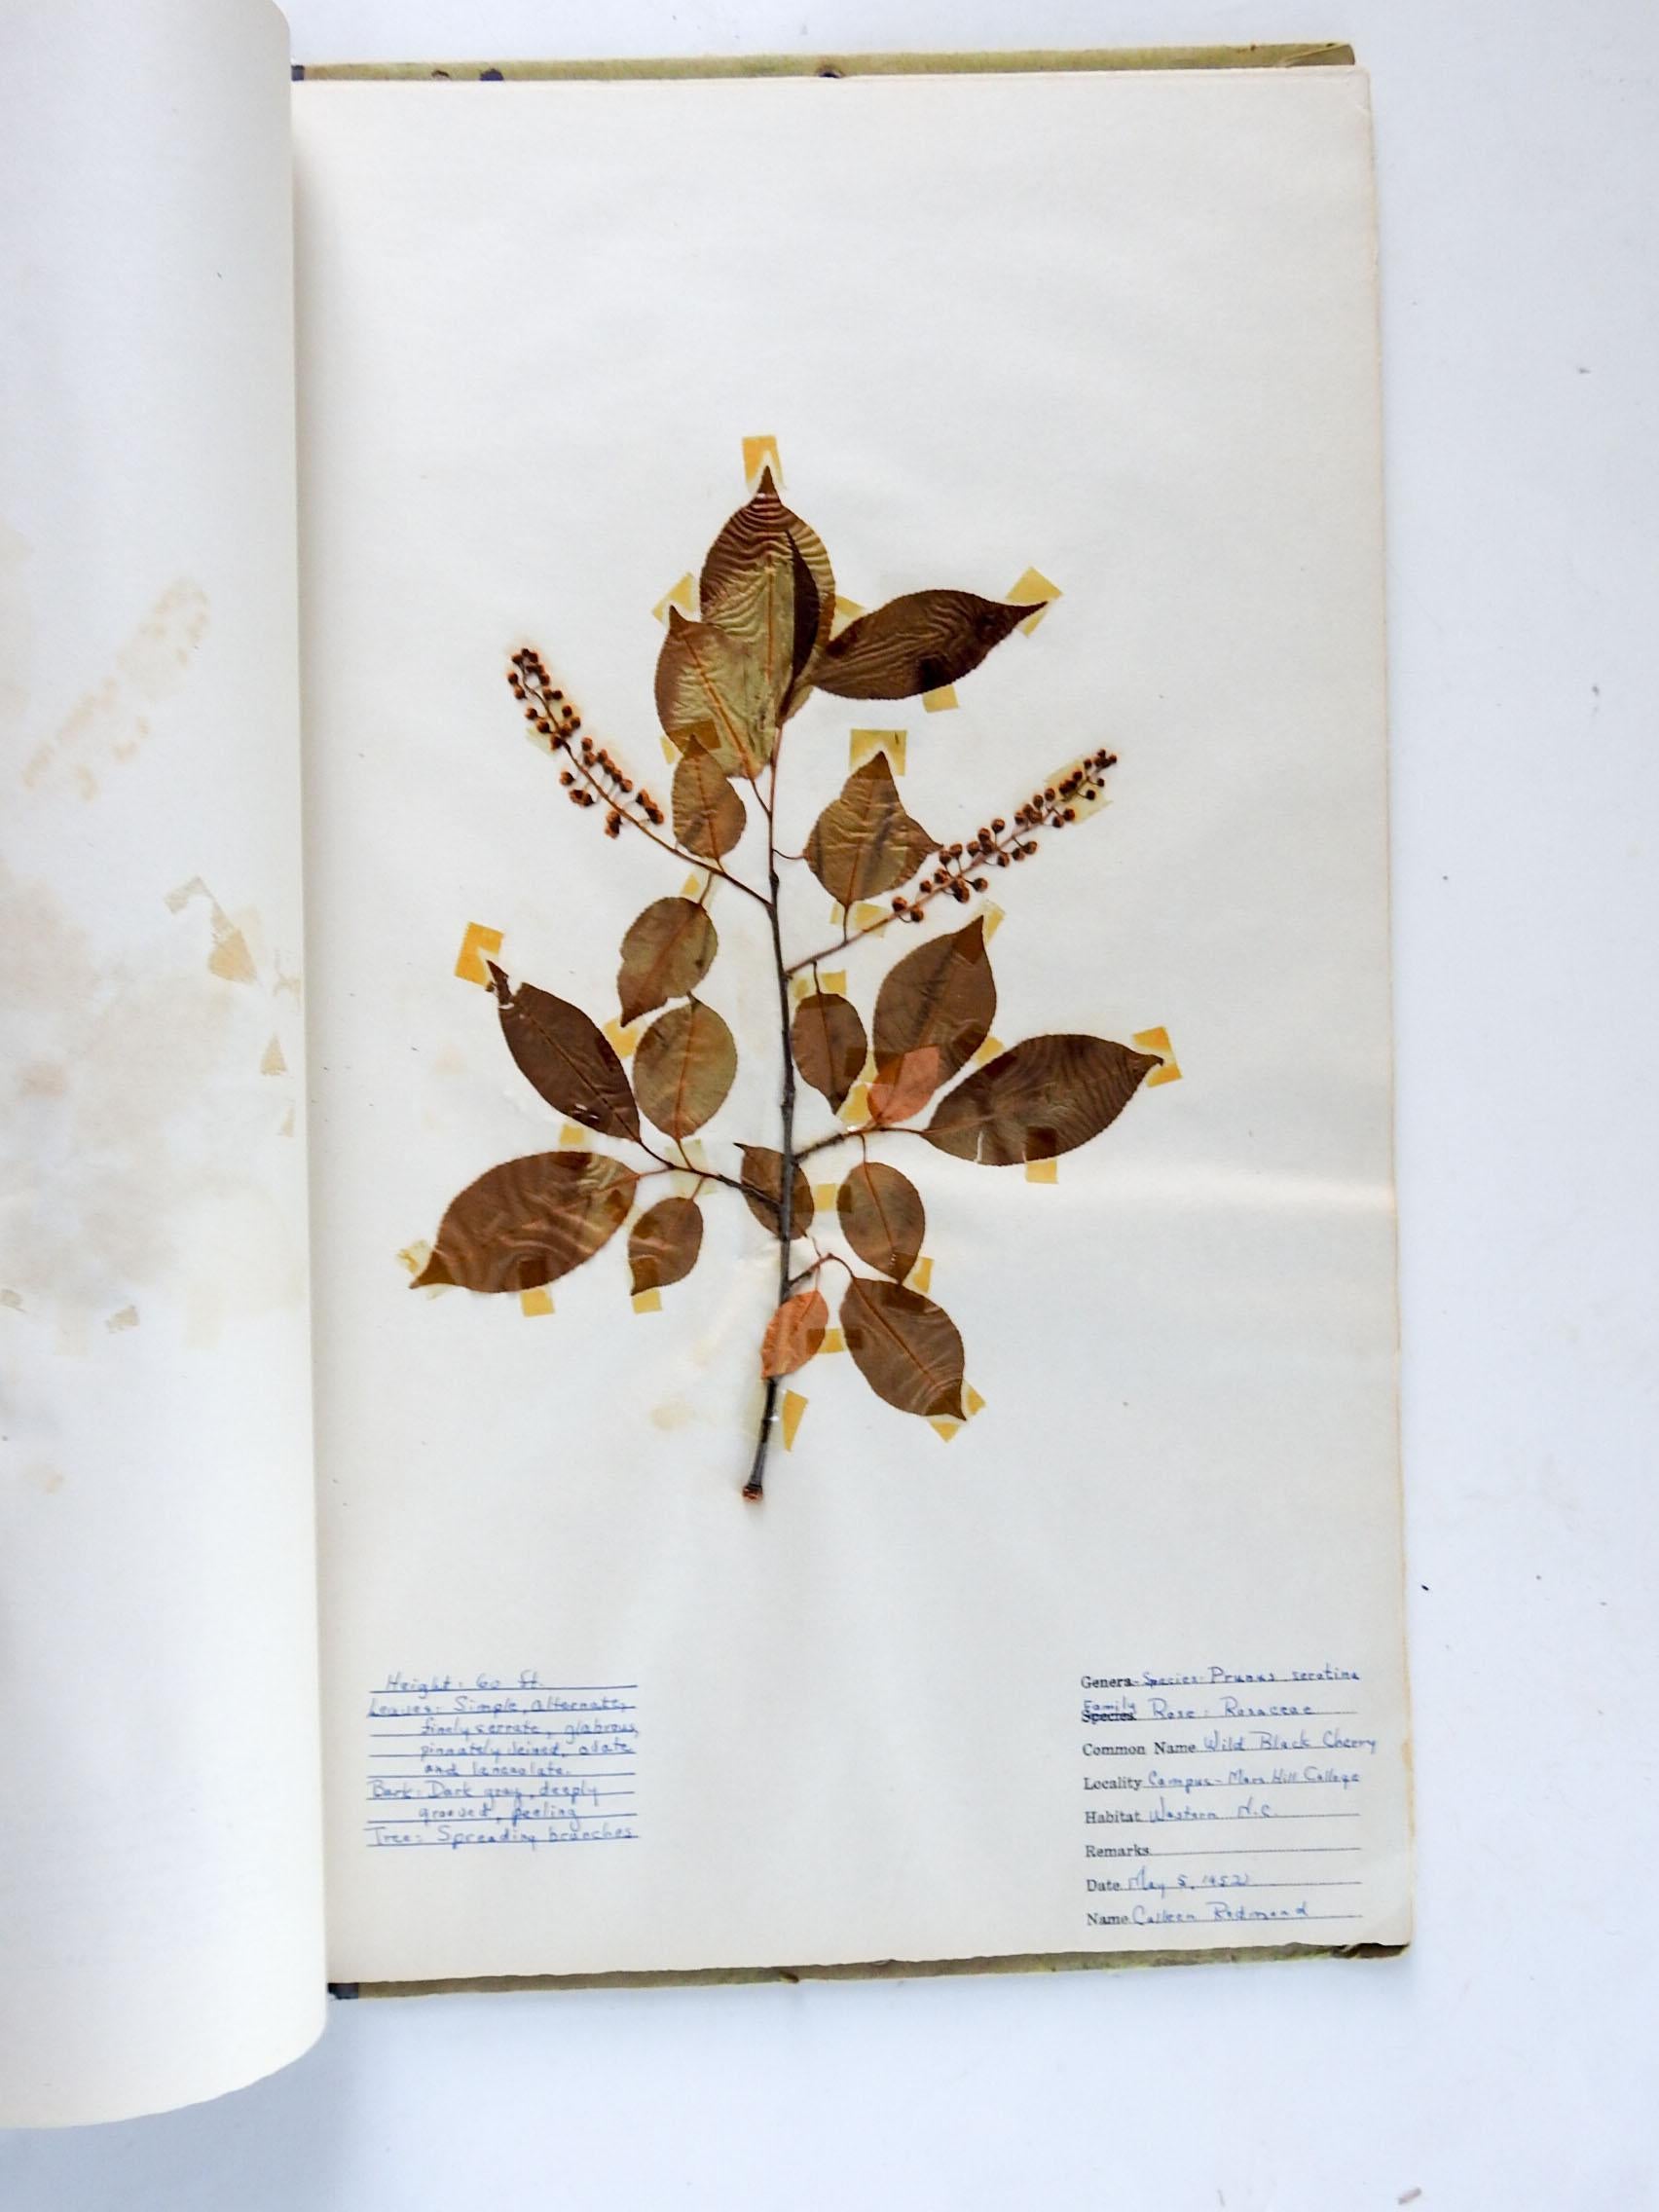 Paper 1930s Herbarium Mars Hill North Carolina 34 Pressed Botanical Specimens For Sale